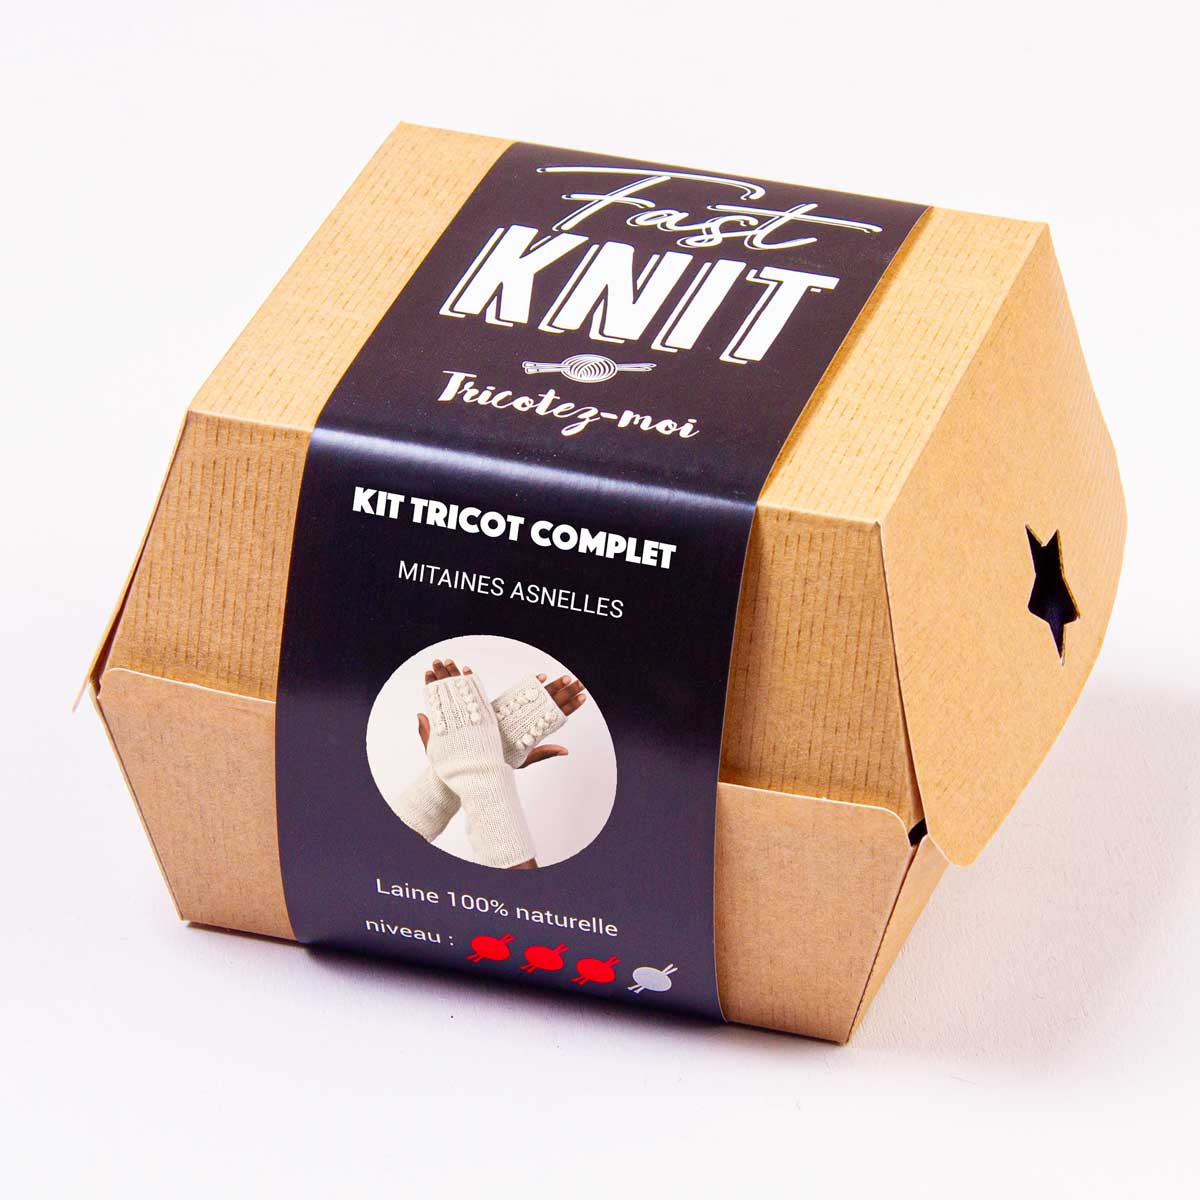 Asnelles fingerless mittens - Fast Knit knitting box